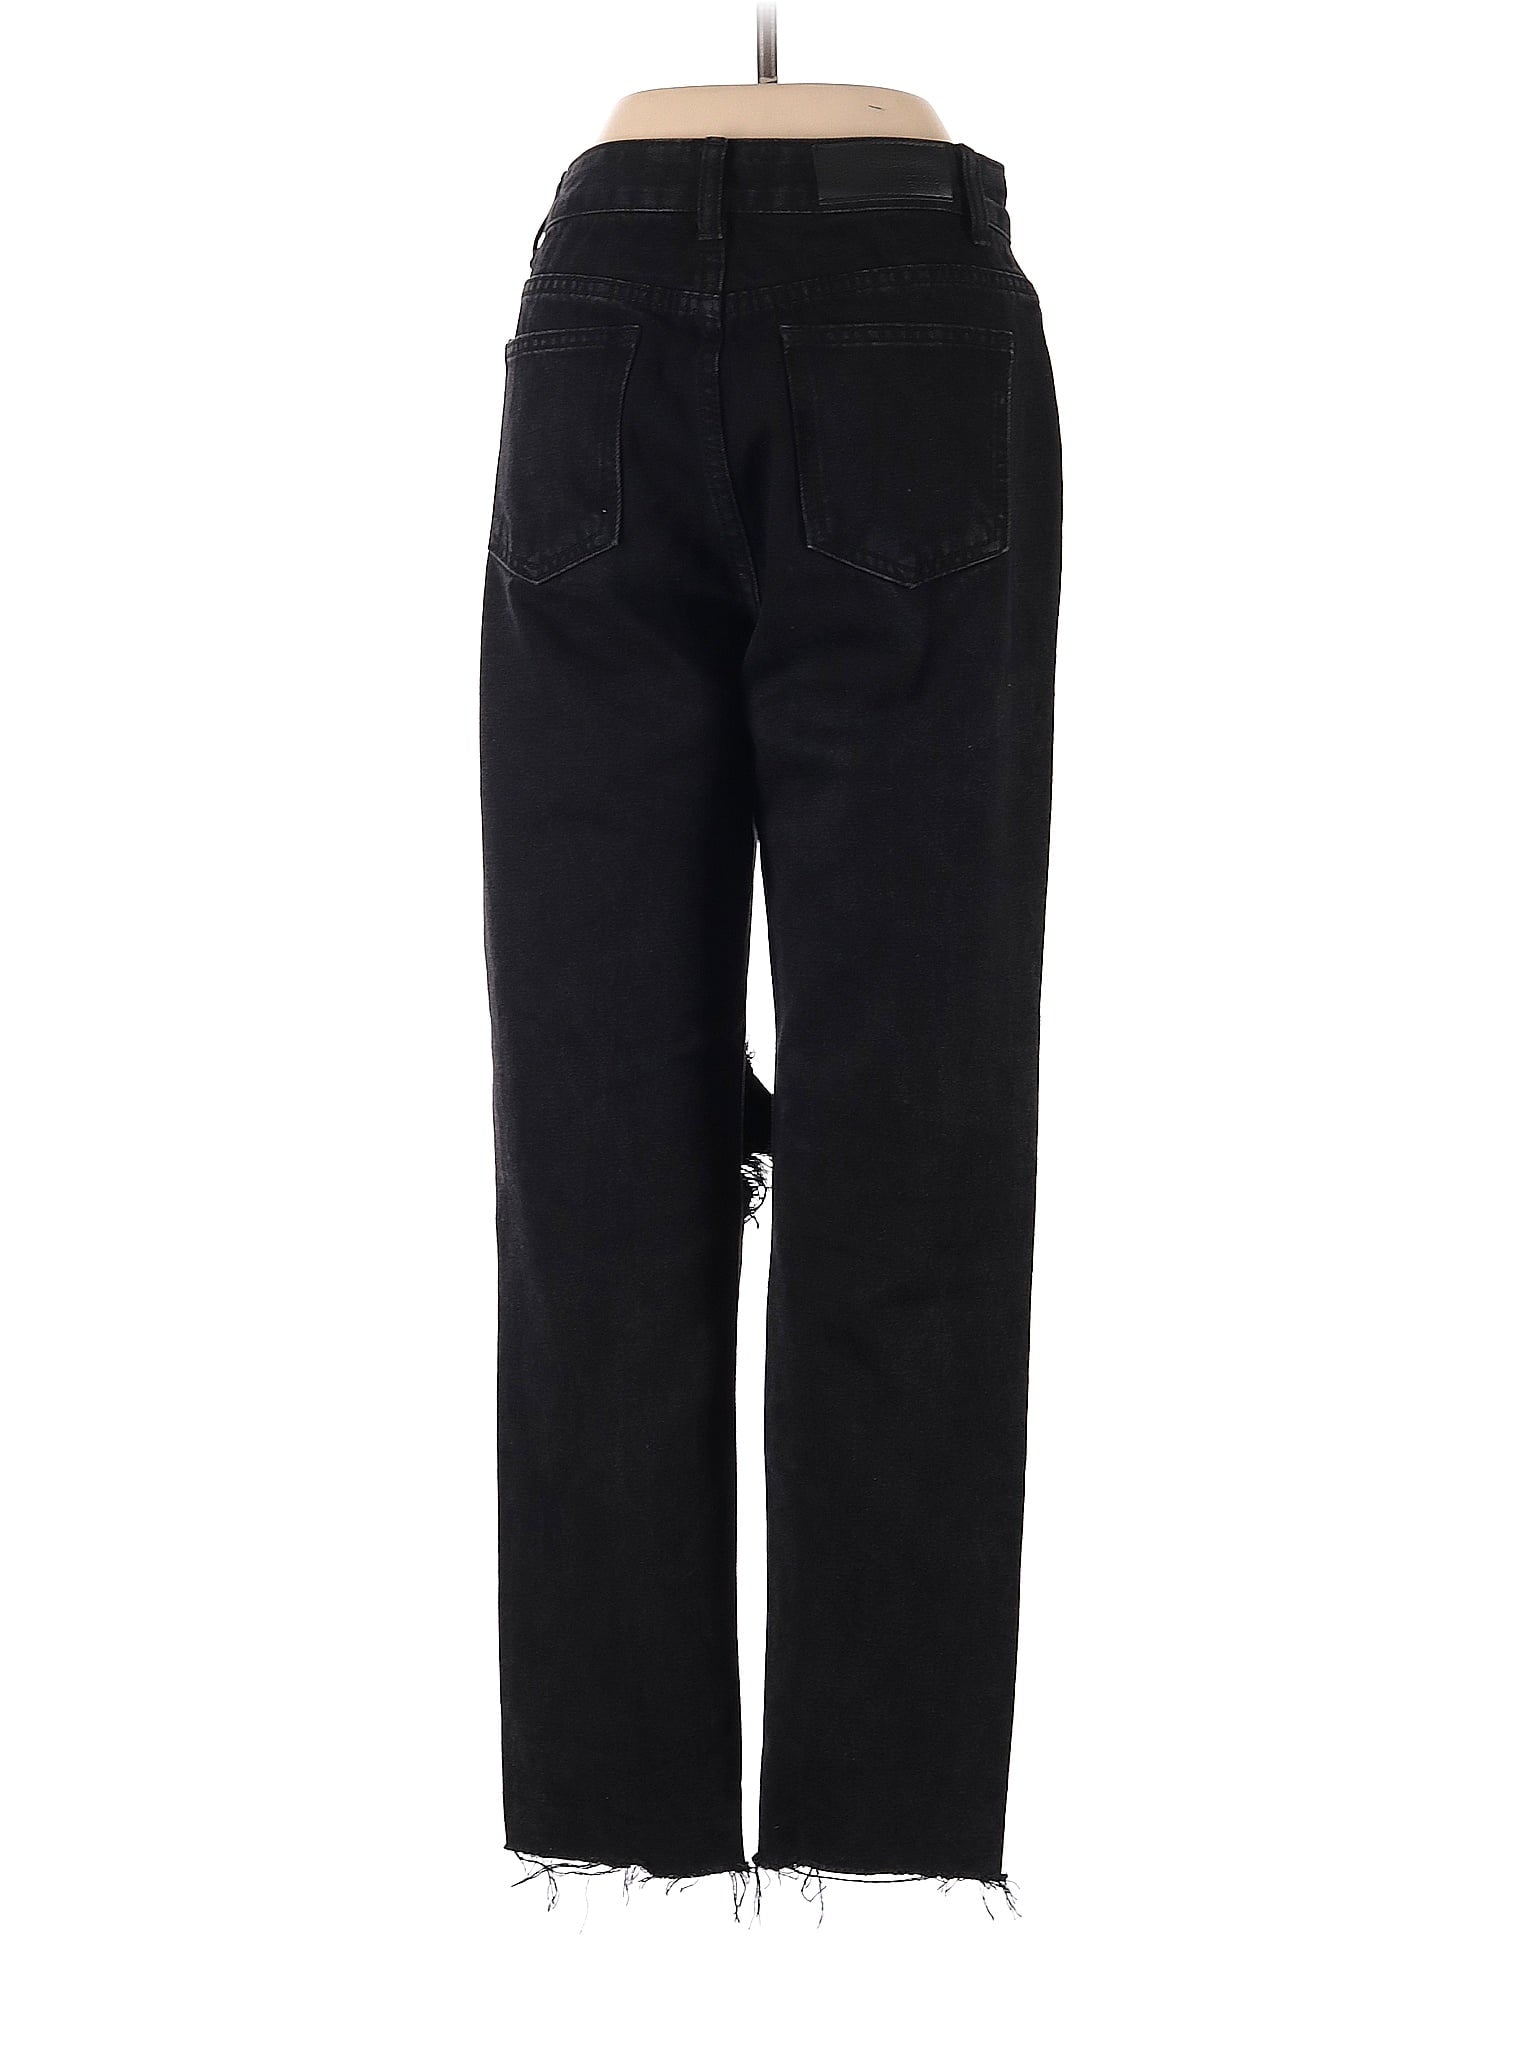 Jeans size - 8 (UK)